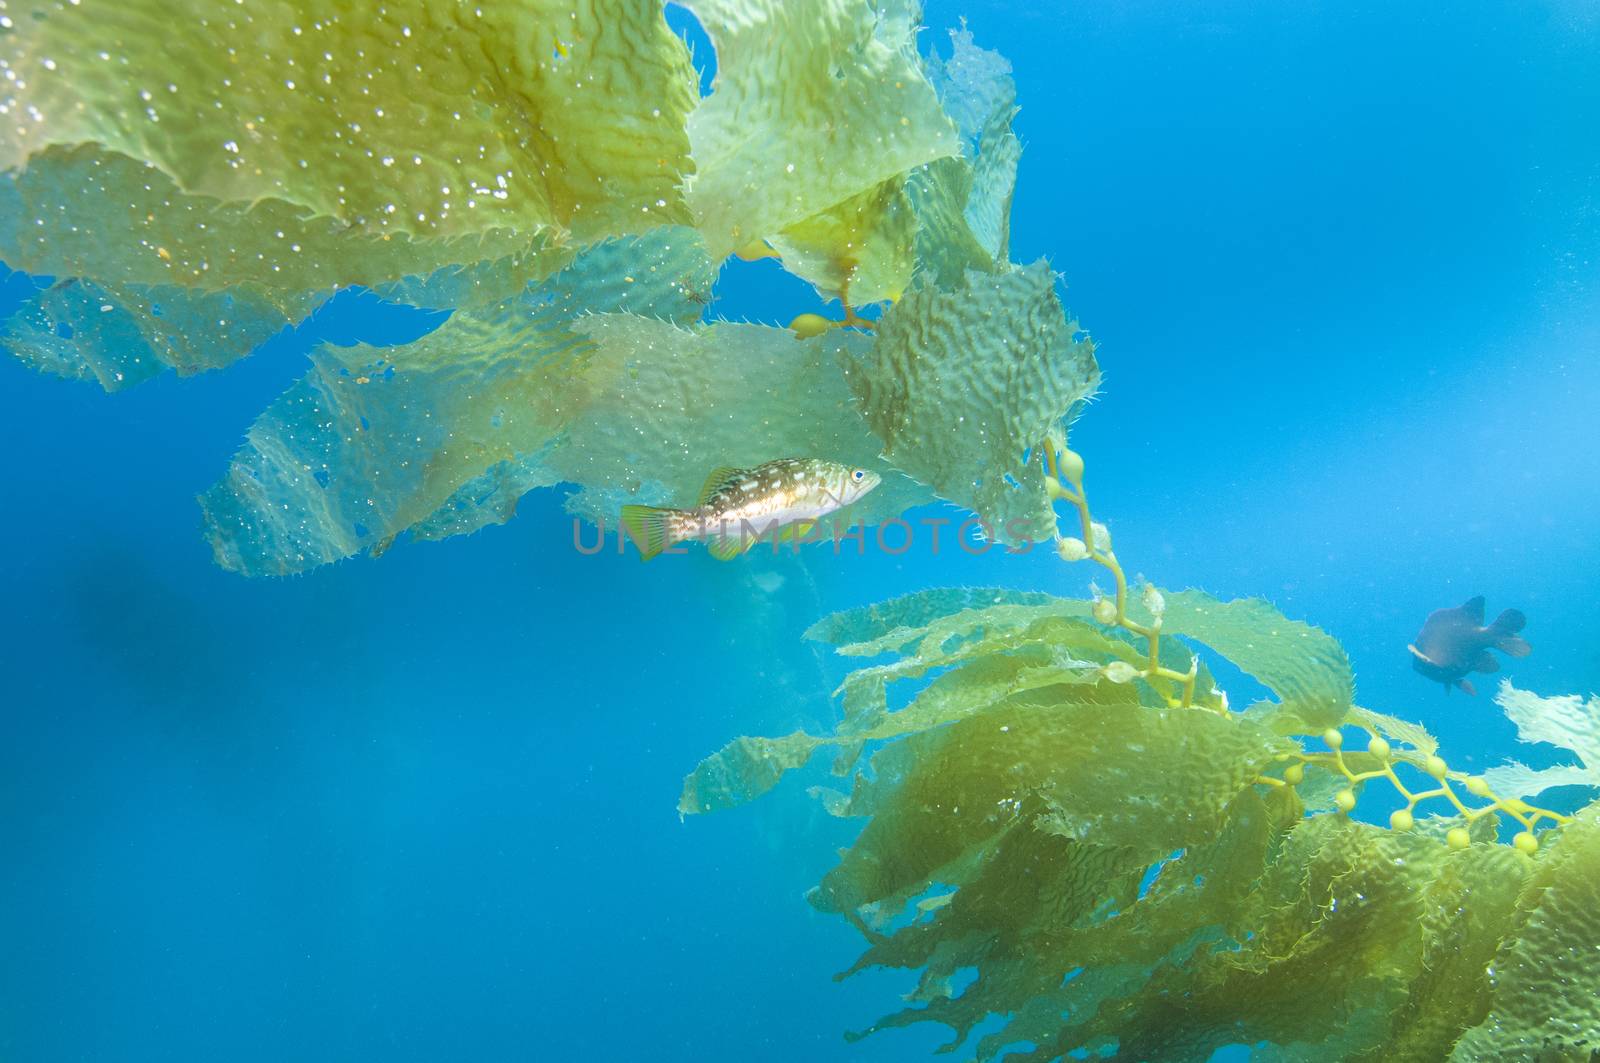 Fish among kelp fronds off Catalina Island, CA by Njean